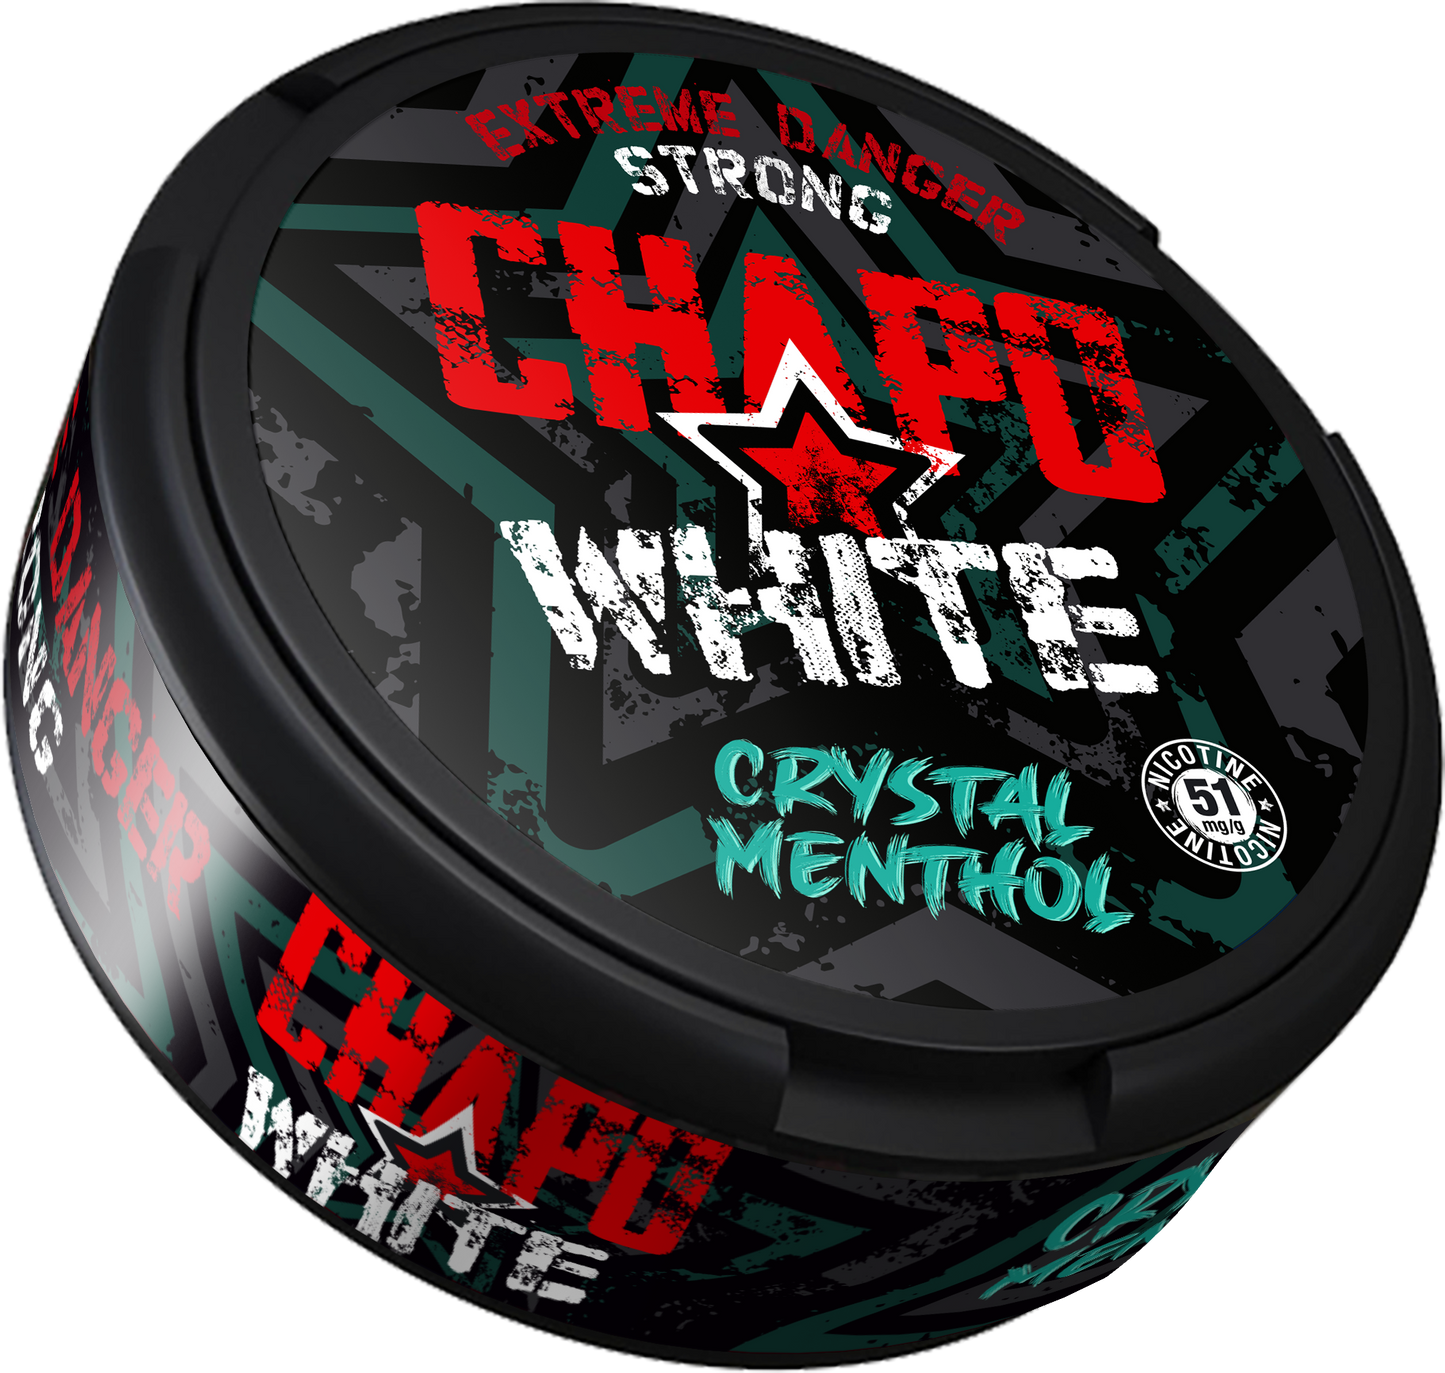 Chapo White Crystal Menthol - 51mg